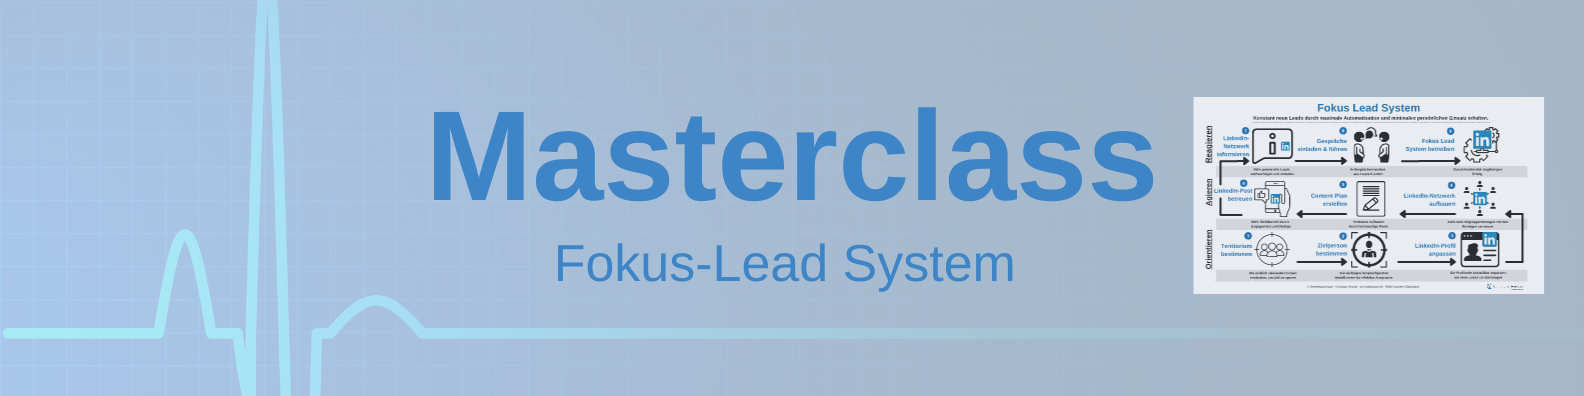 LinkedIn-Fokus-Lead-System-MasterClass-Landingpage-2